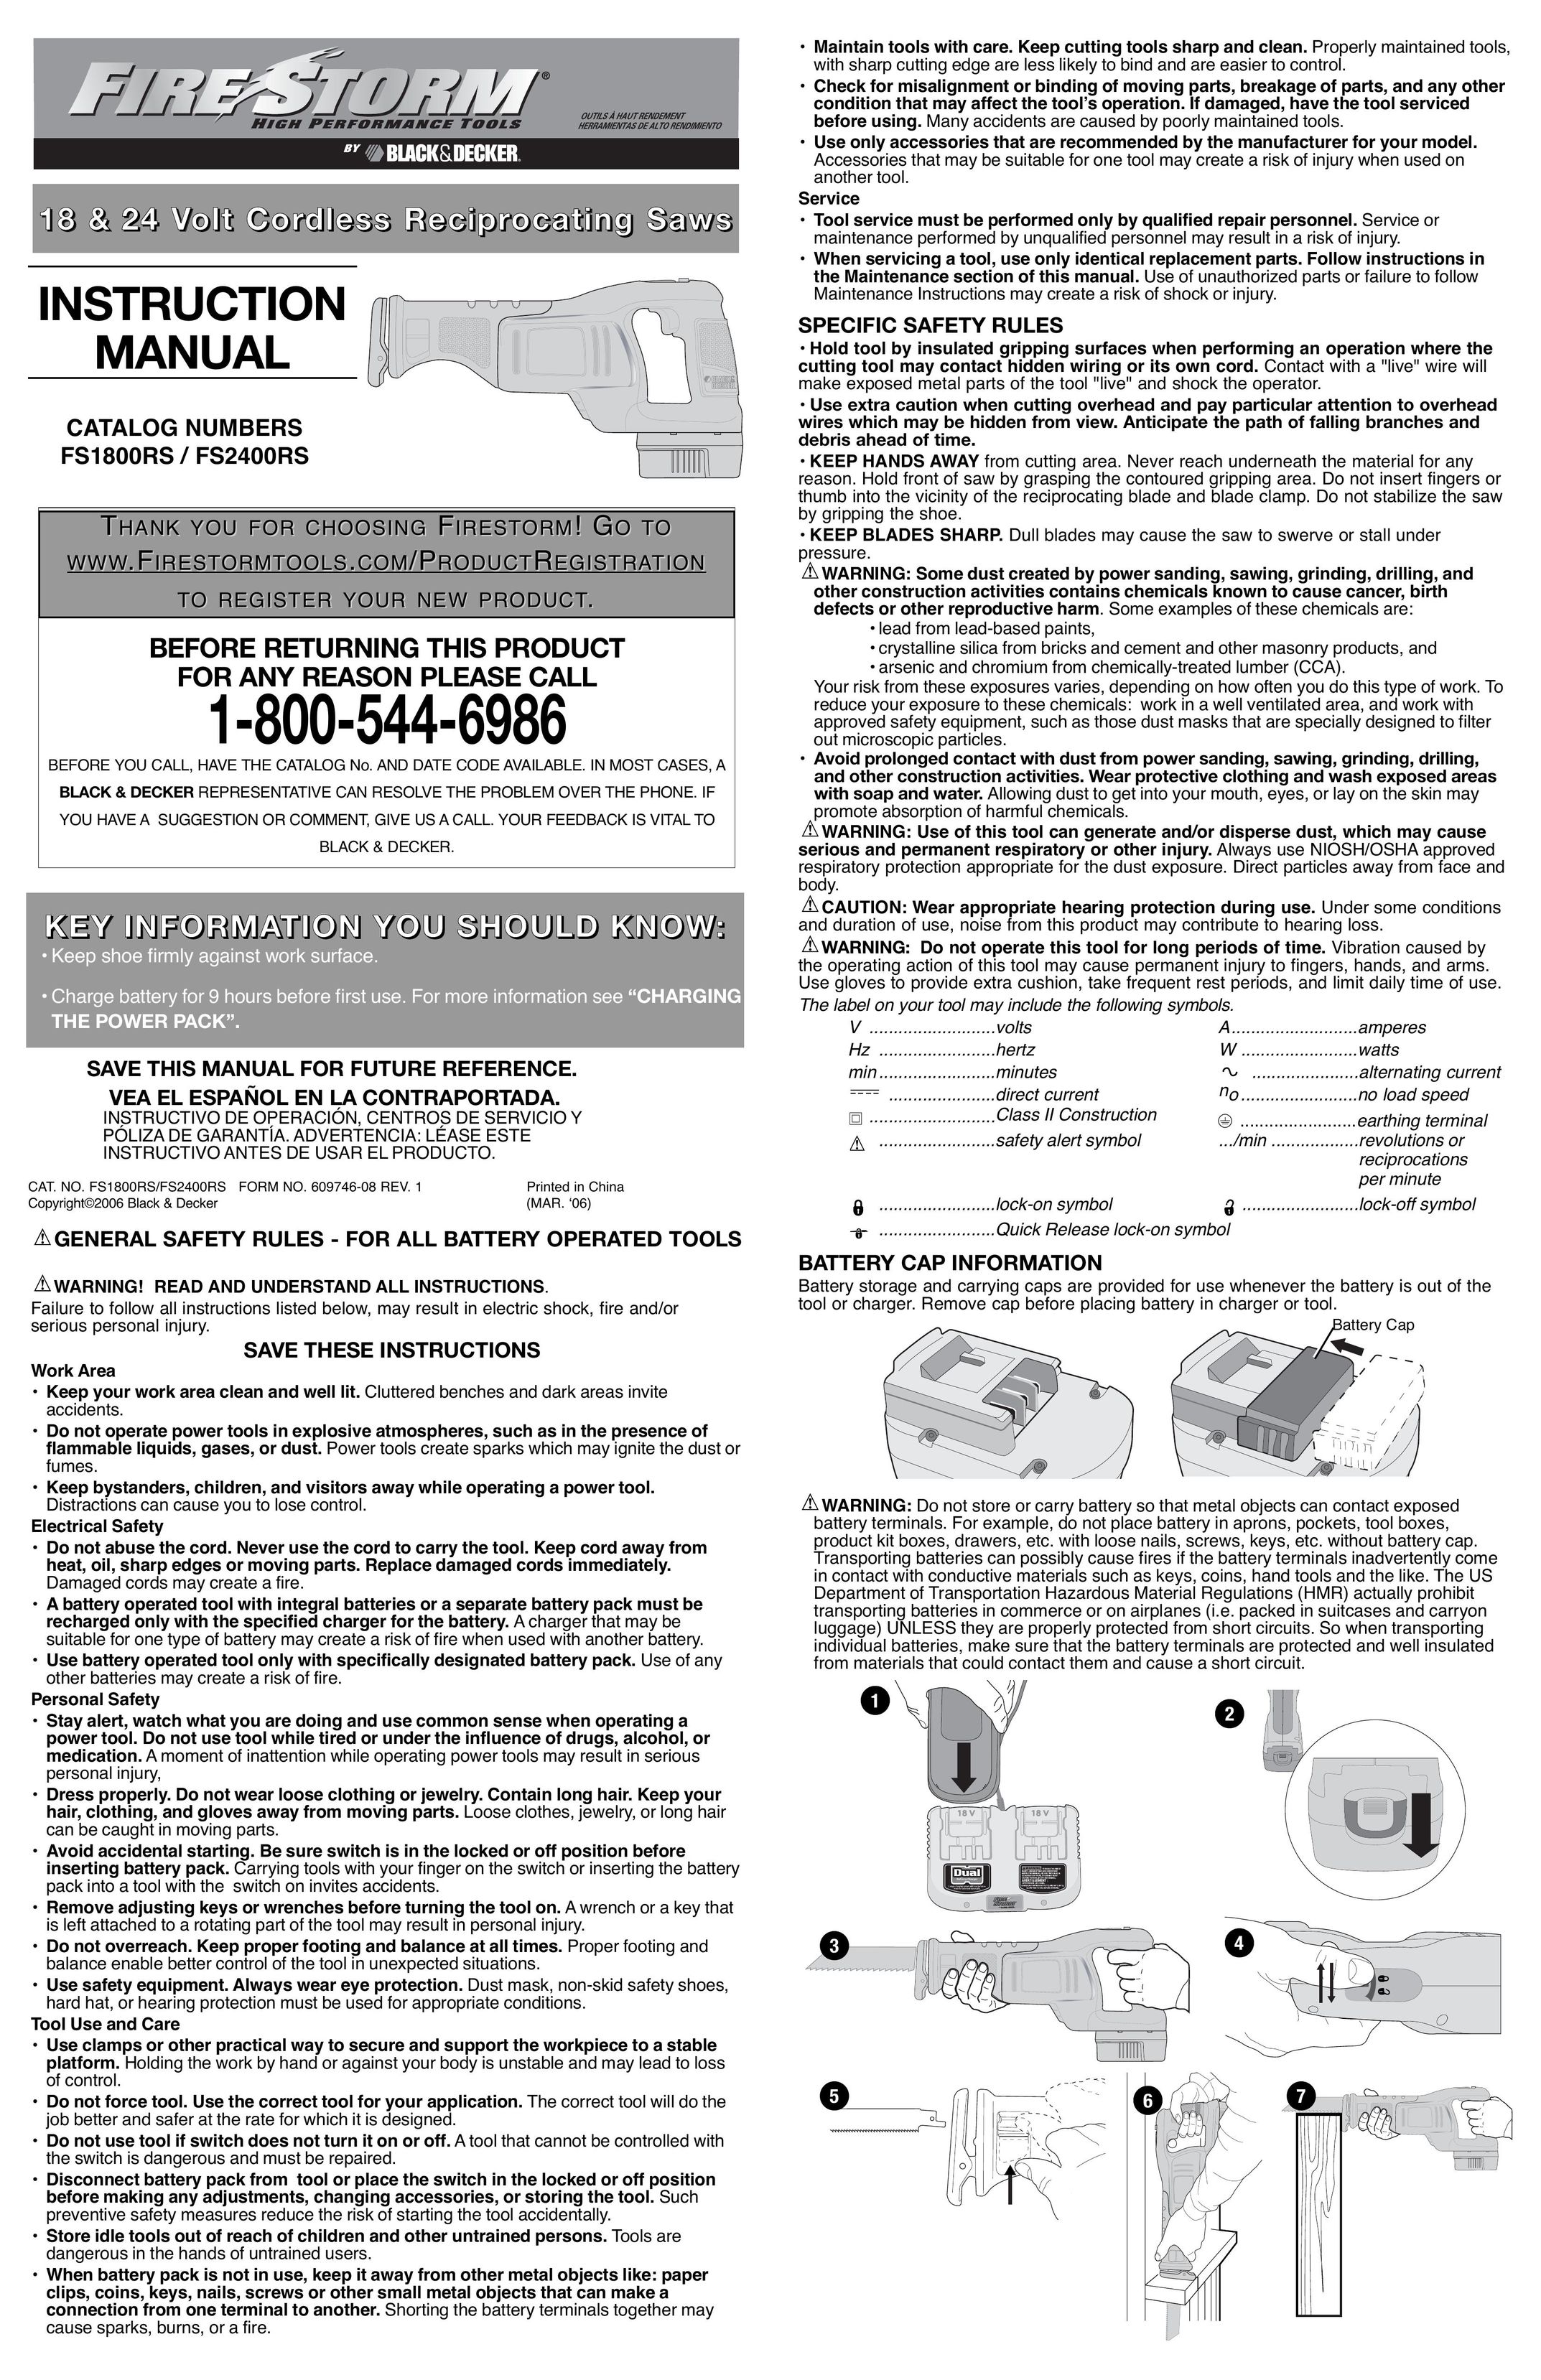 Black & Decker FS2400RS Cordless Saw User Manual